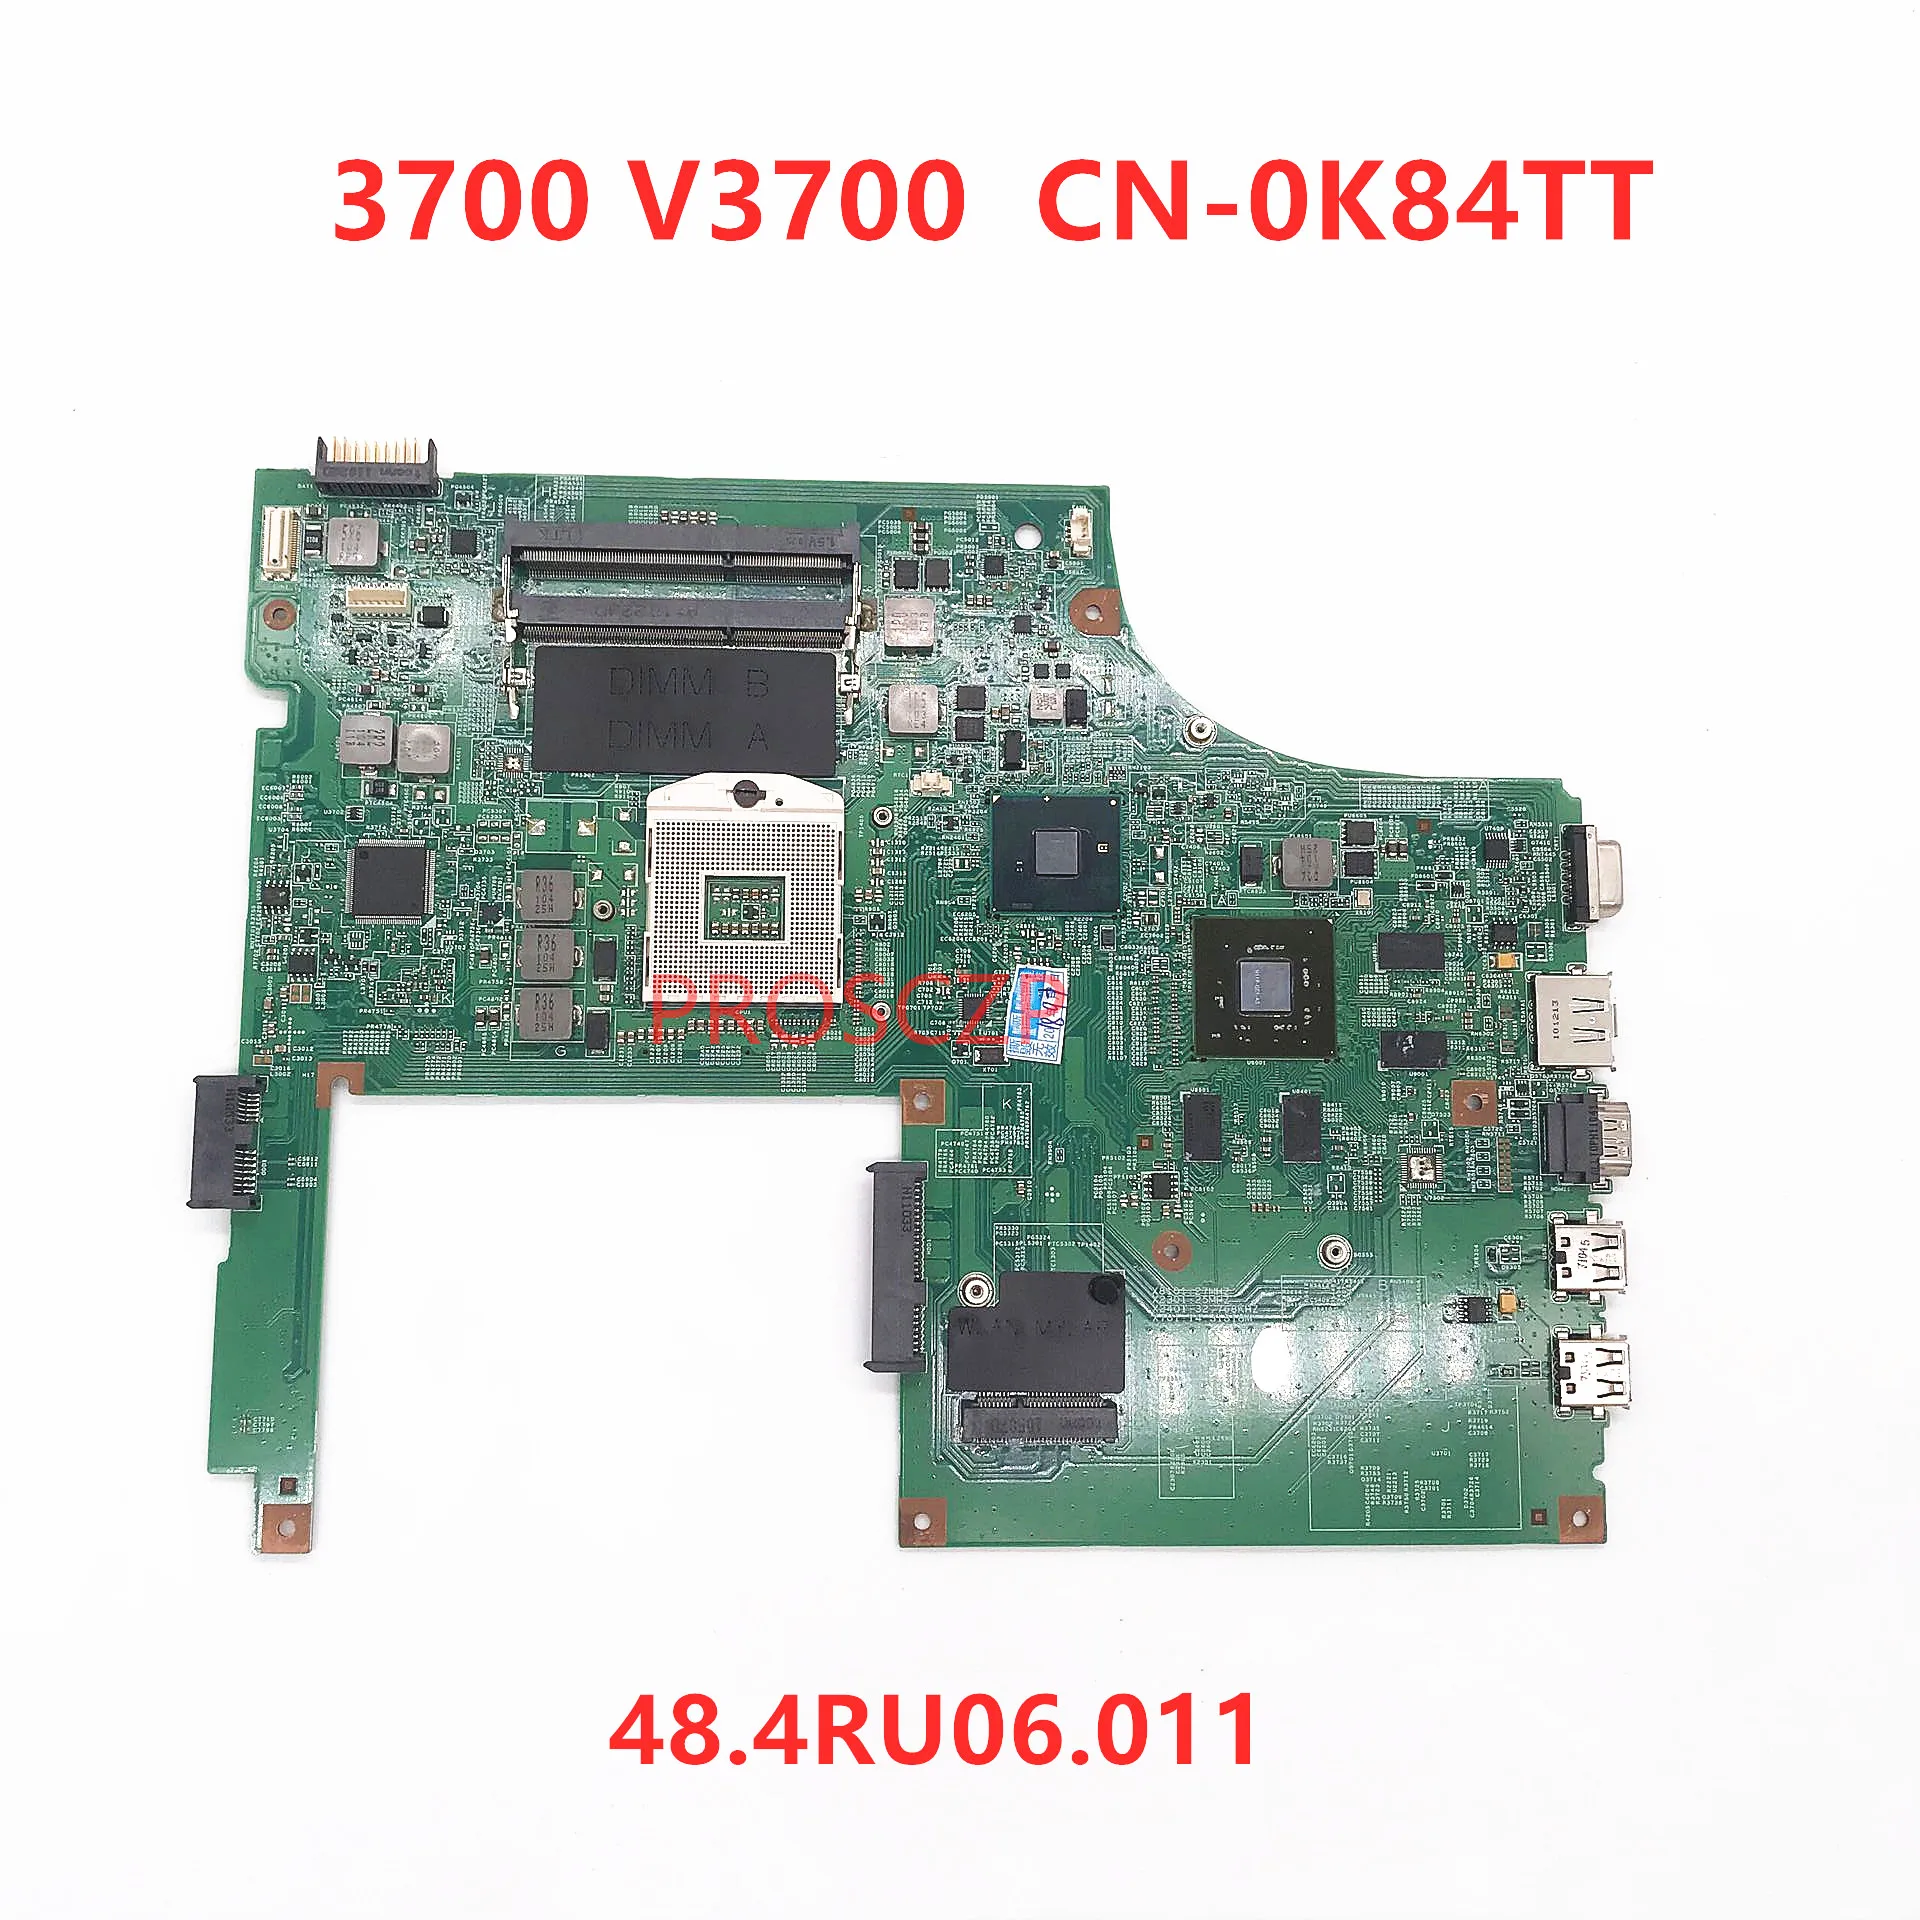 CN-0K84TT 0K84TT K84TT Mainboard For DELL 3700 V3700 Laptop Motherboard 09290-1 48.4RU06.011 N11P-GE1-A3 HM57 100% Working Well